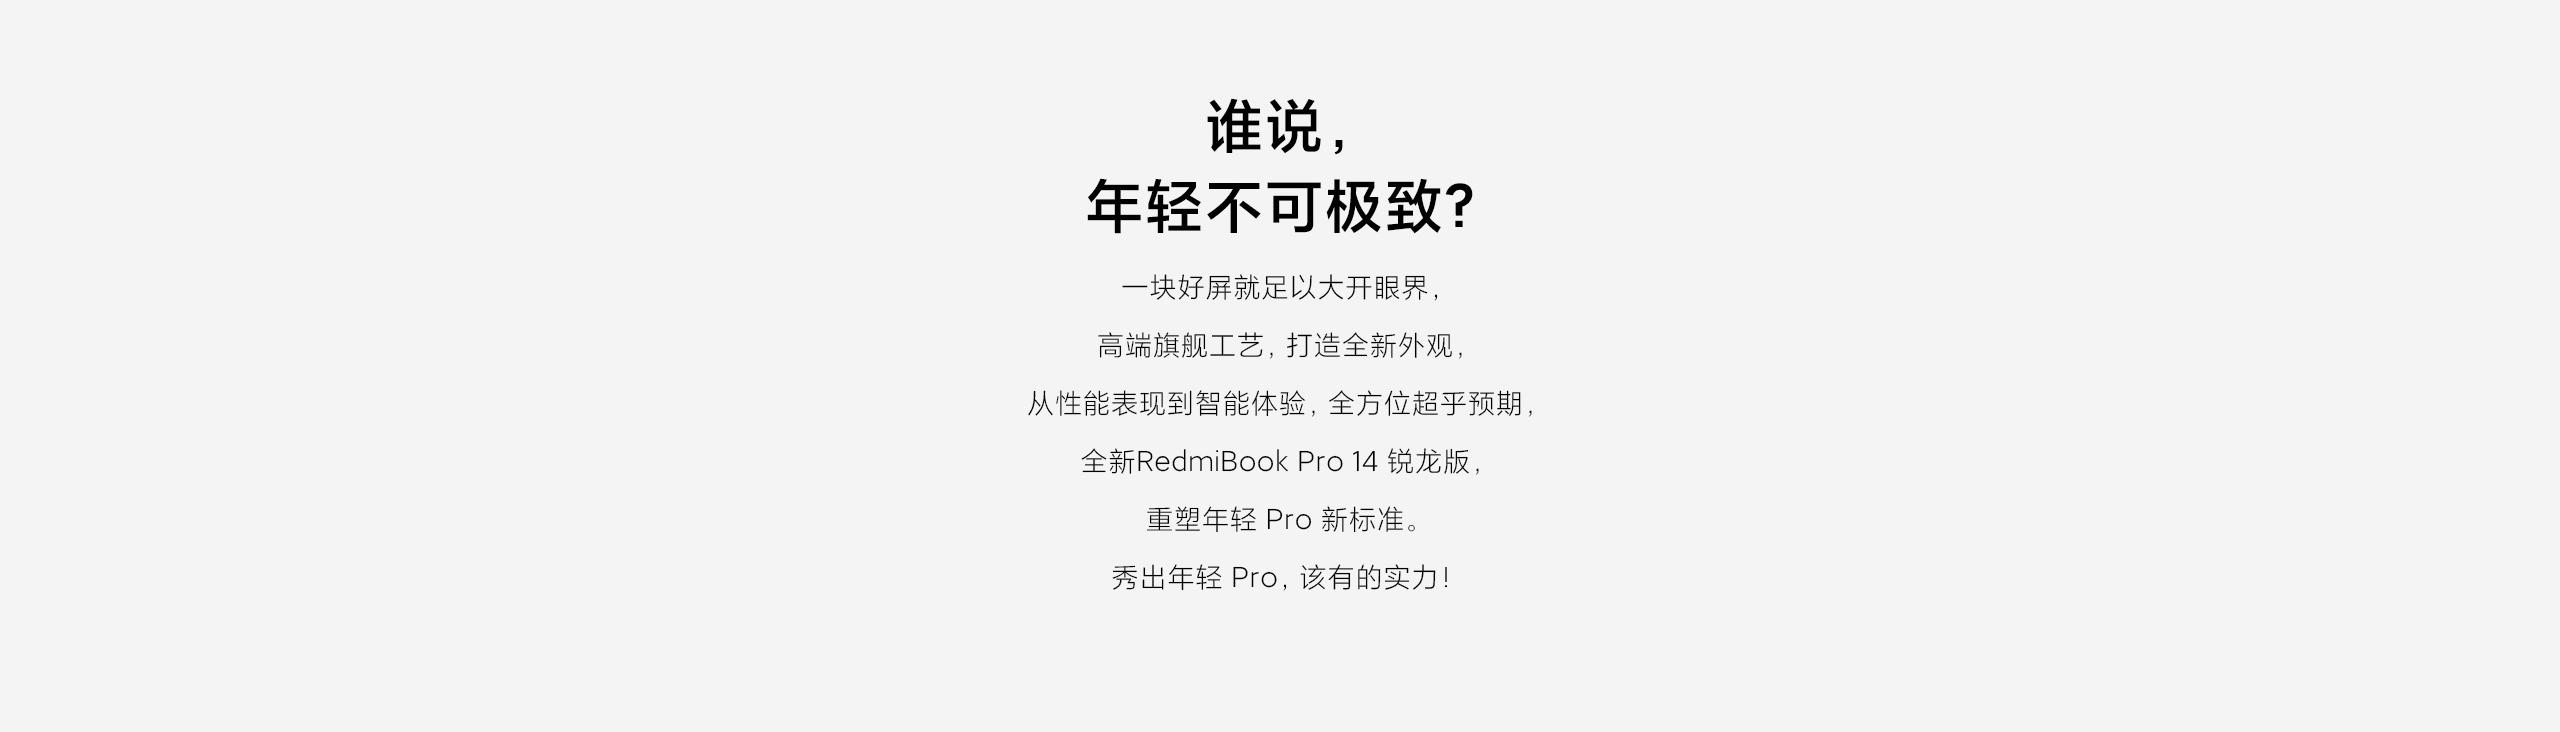 Redmibook Pro 14 锐龙版立即购买 小米商城